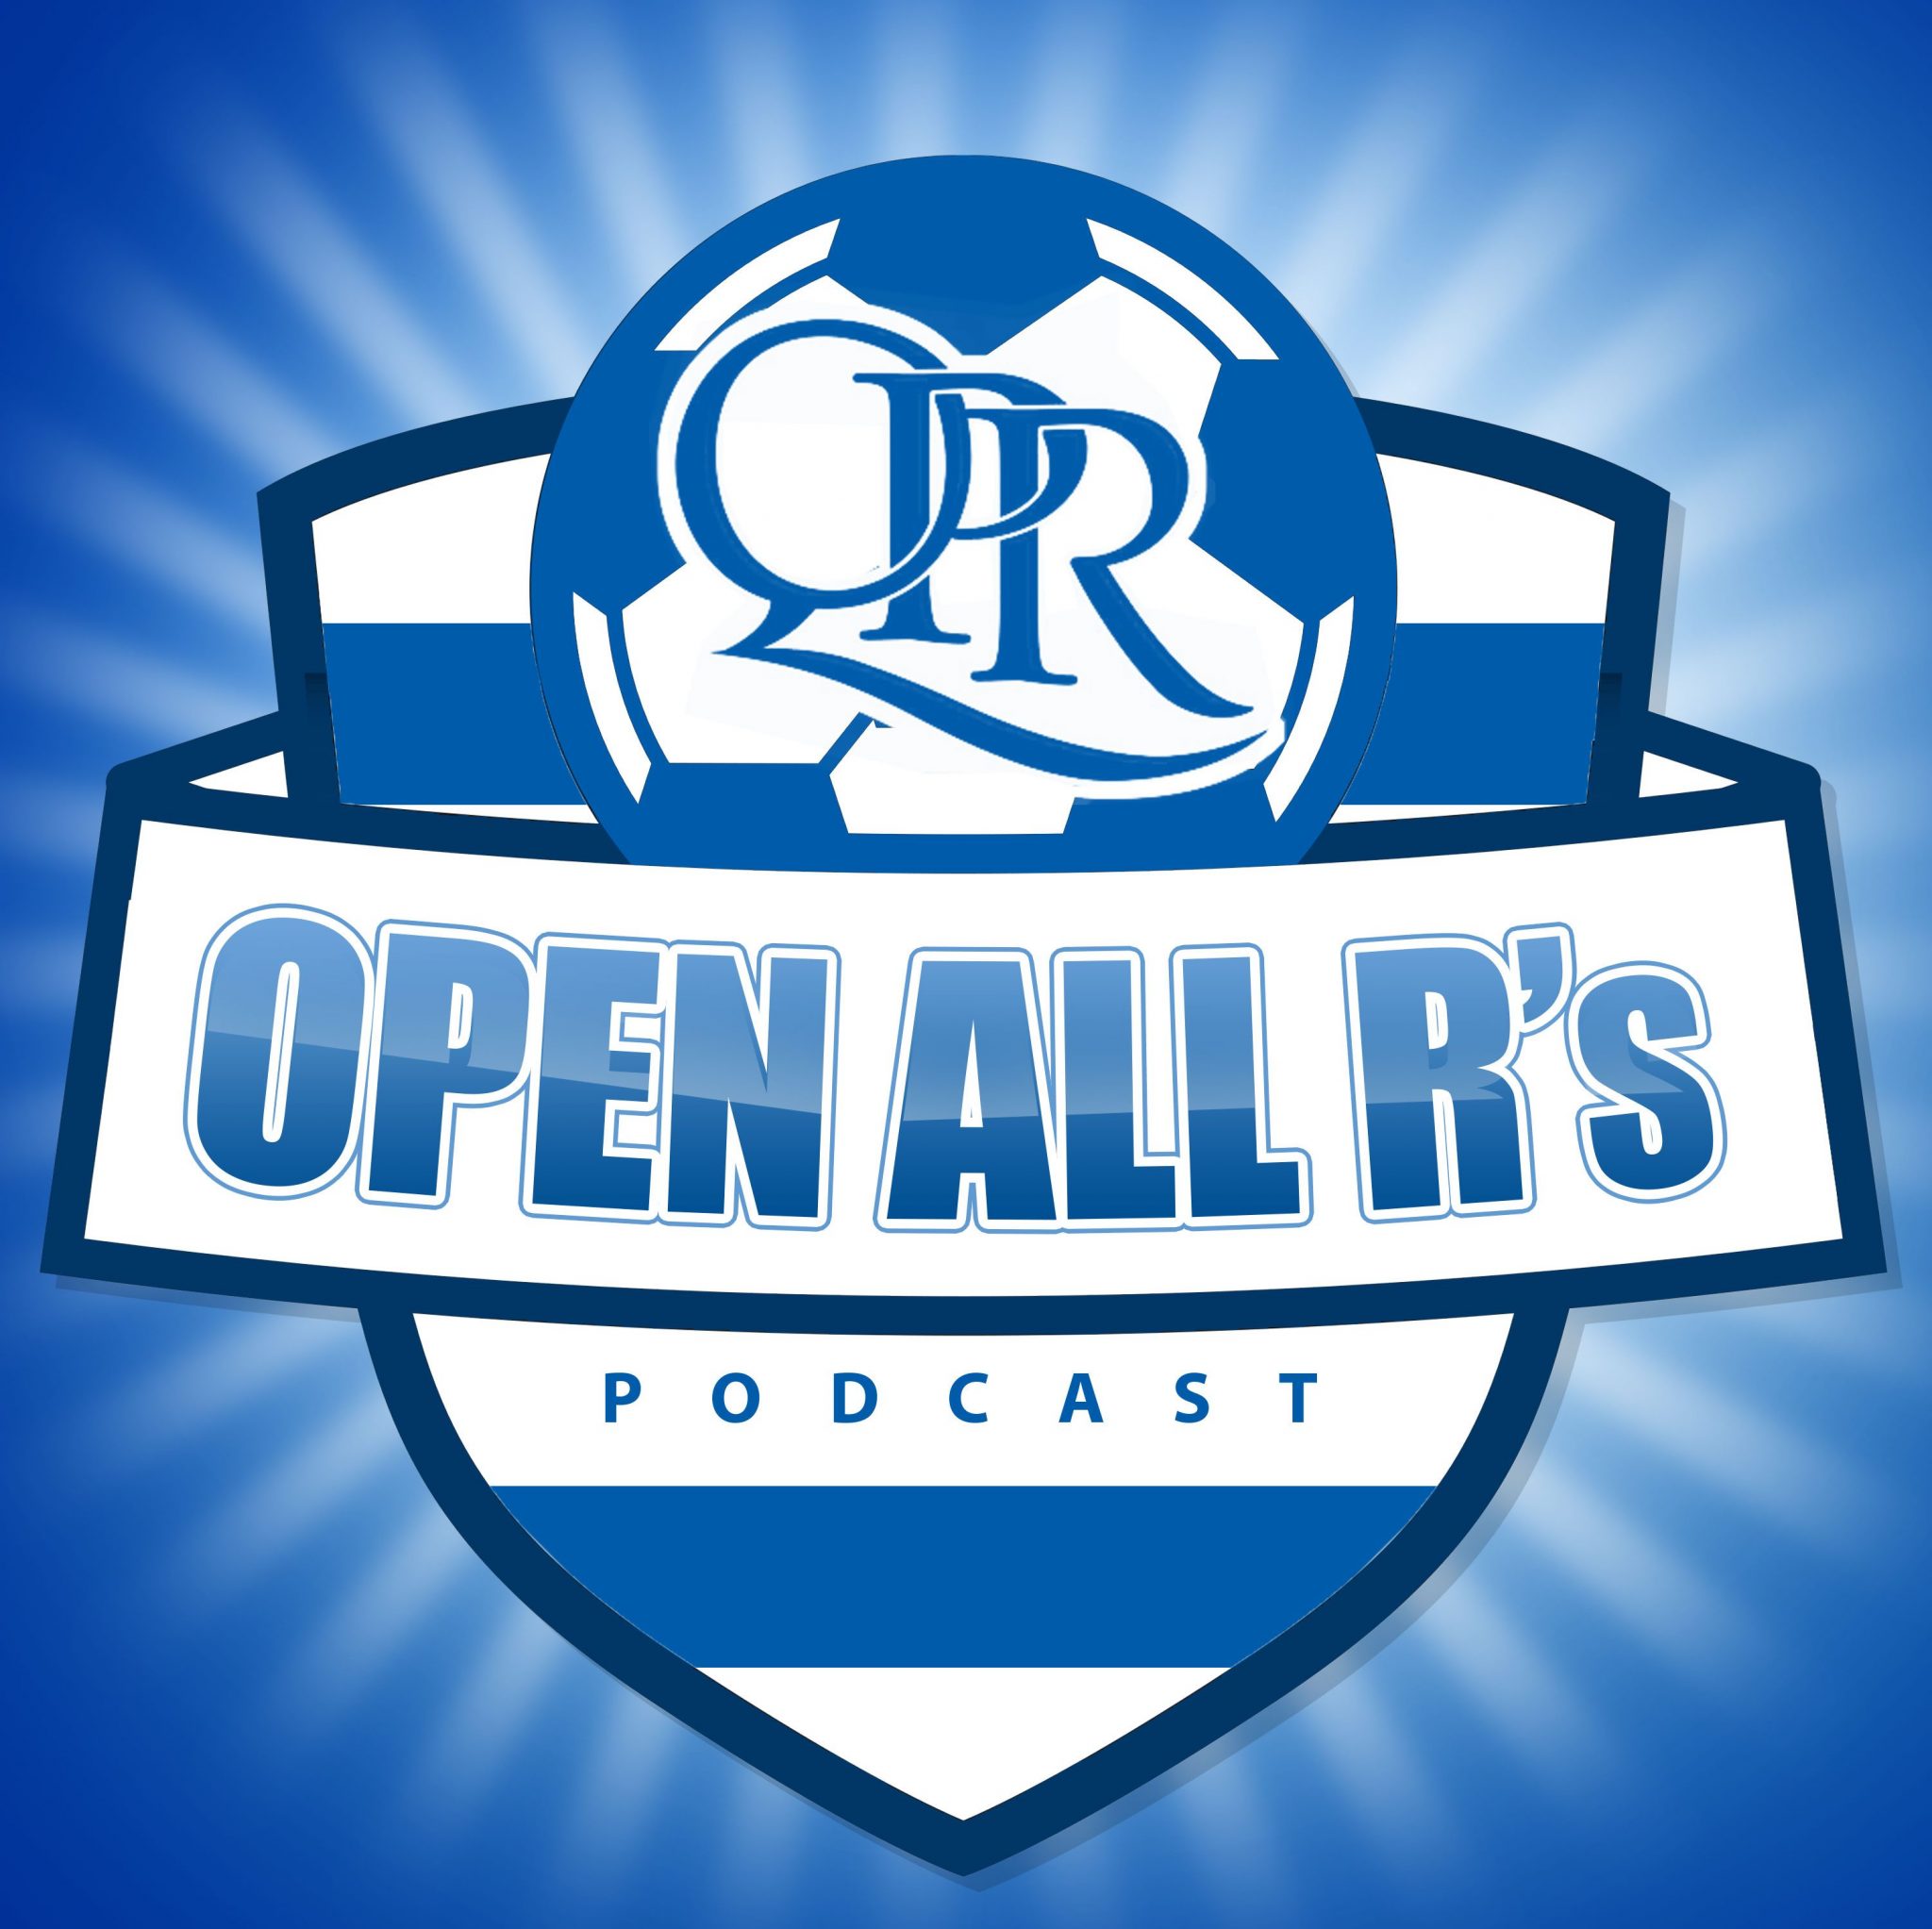 QPR Podcast